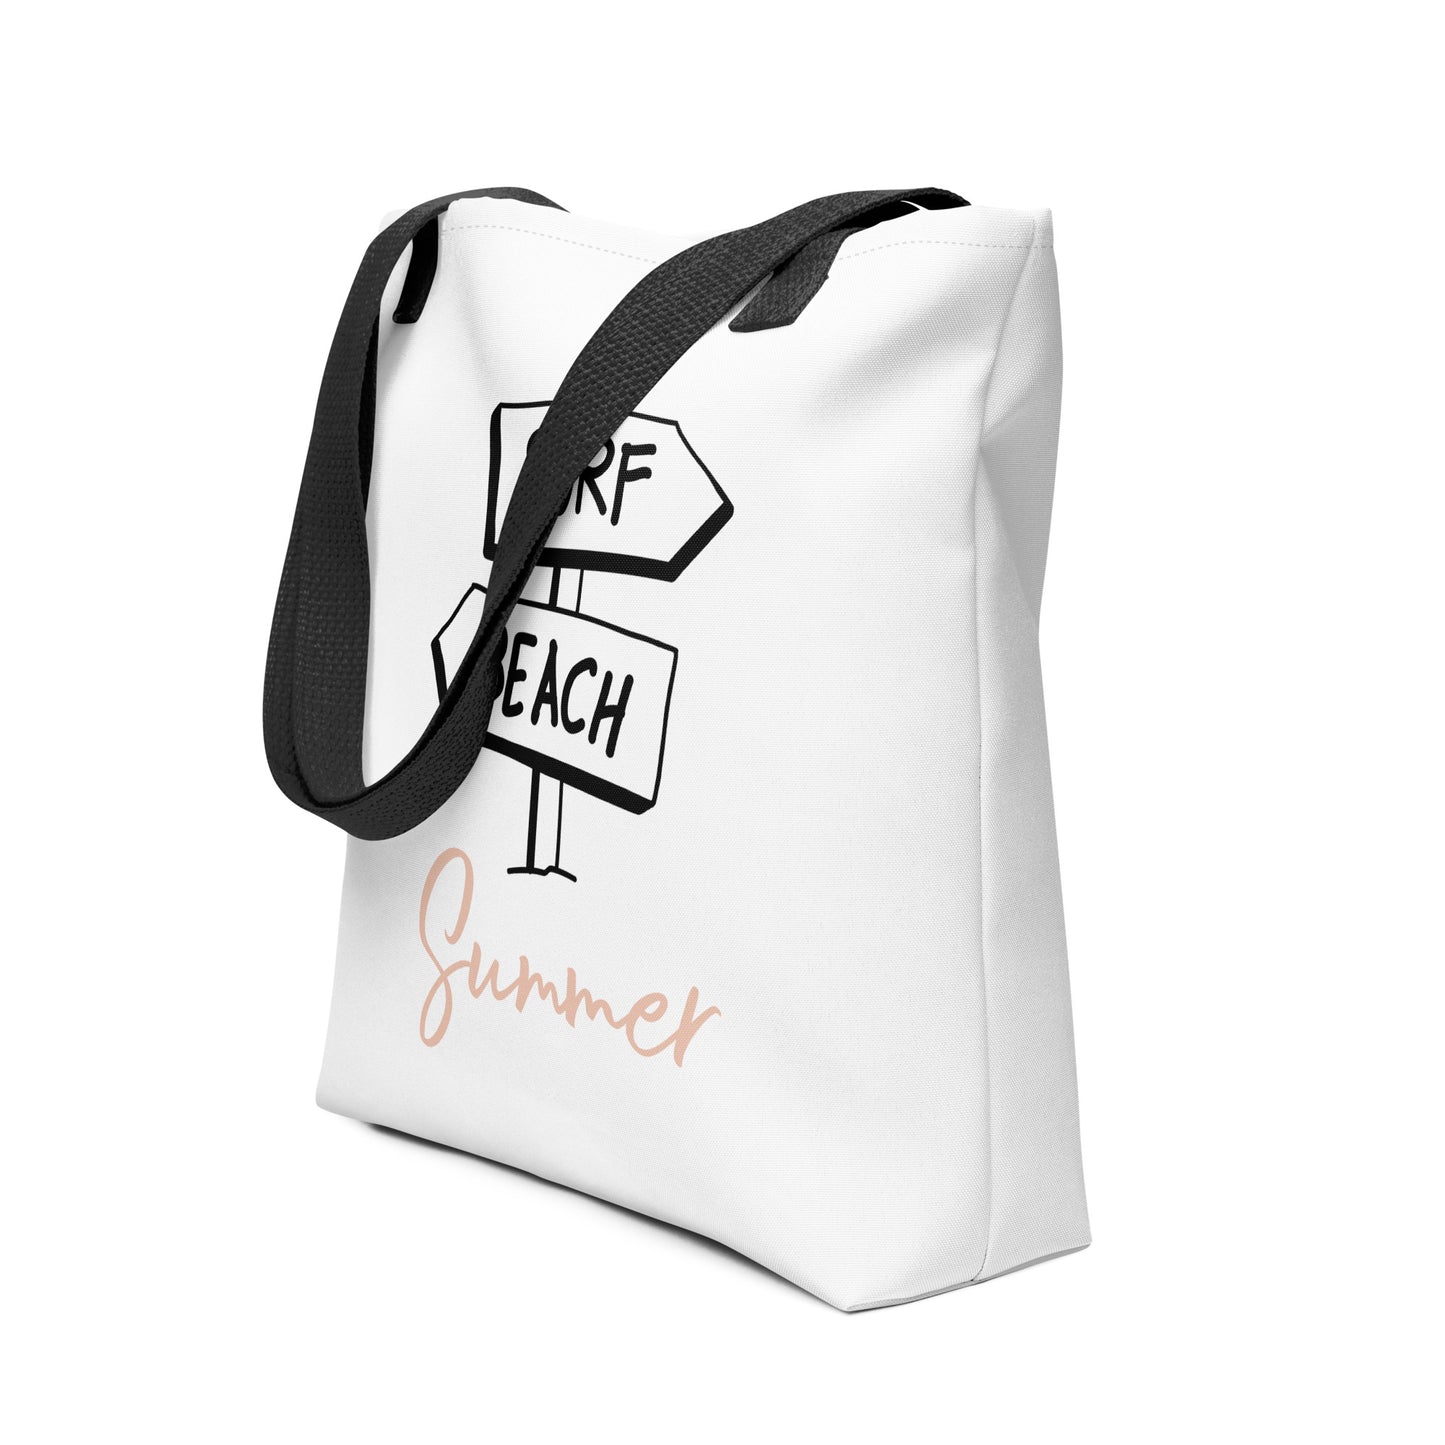 "Summer" bag